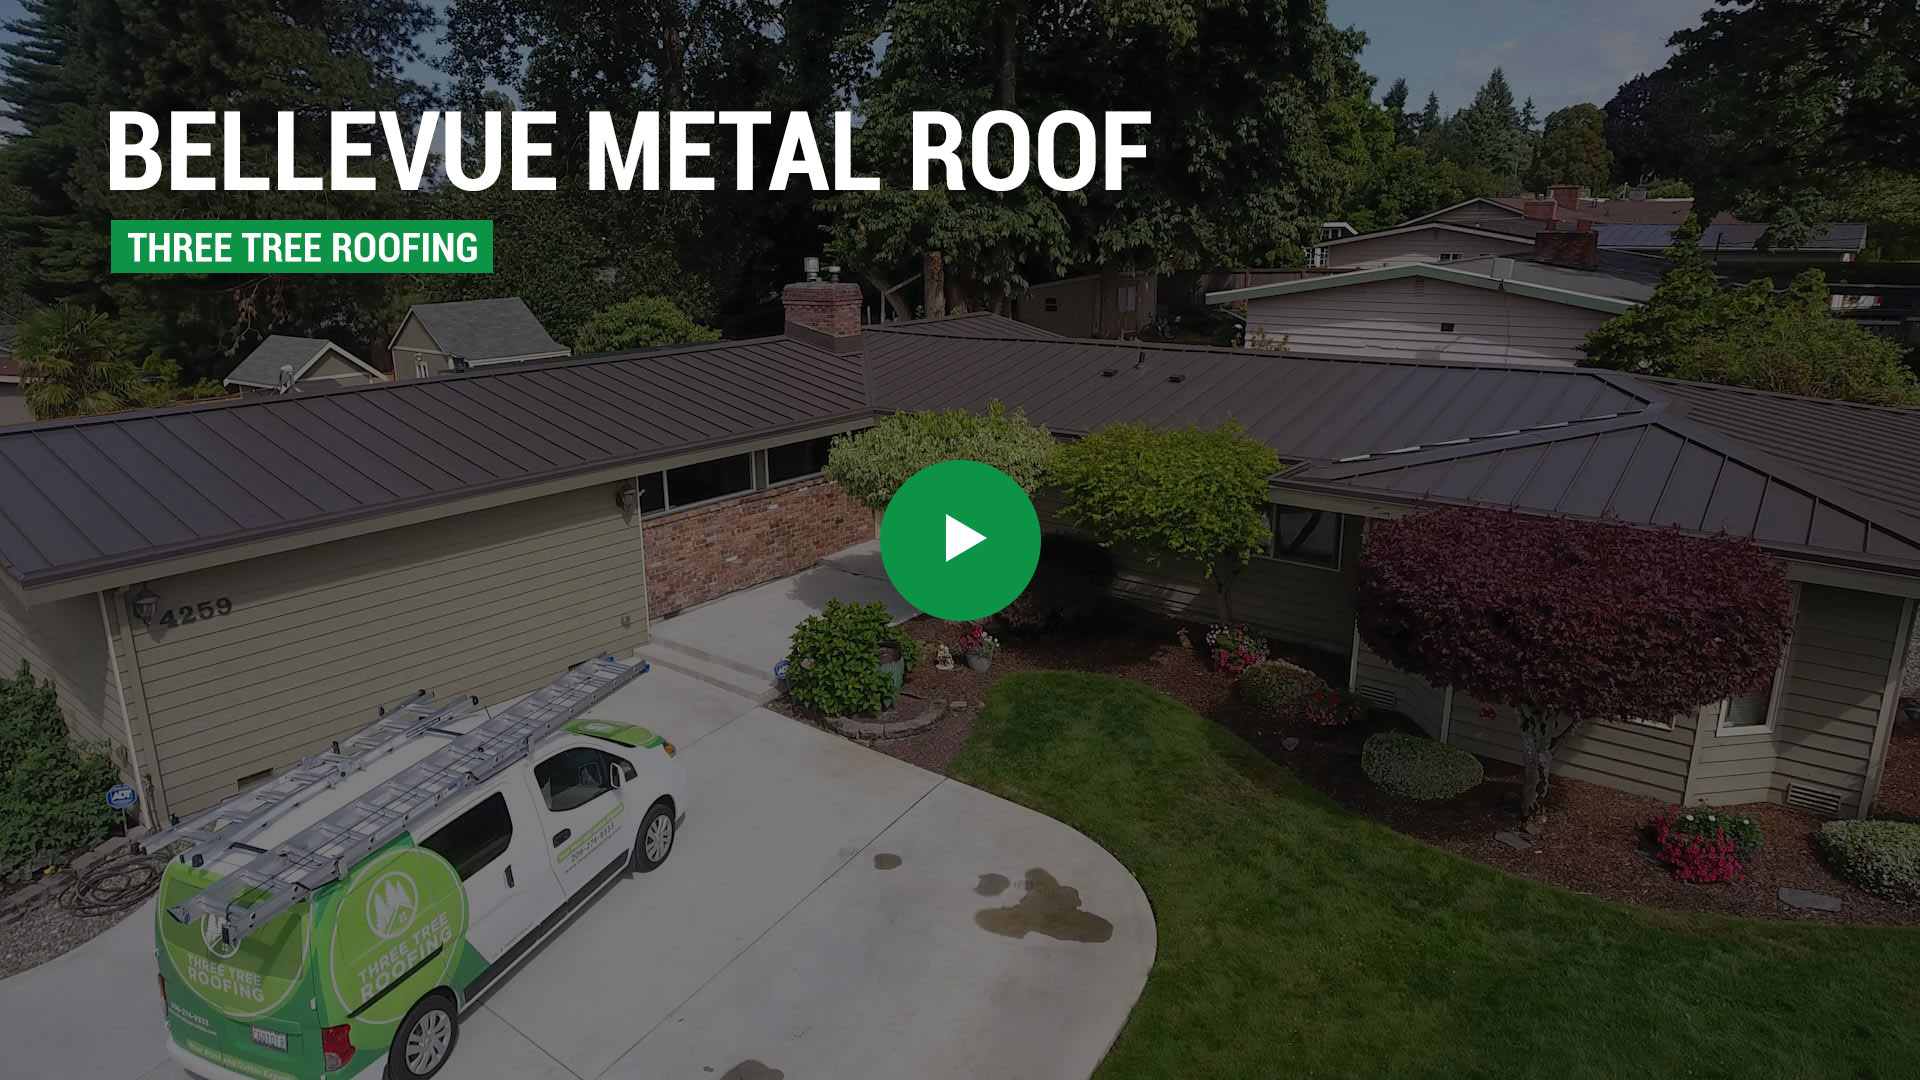 Roofing Project: Bellevue Metal Roof - Roofing Video